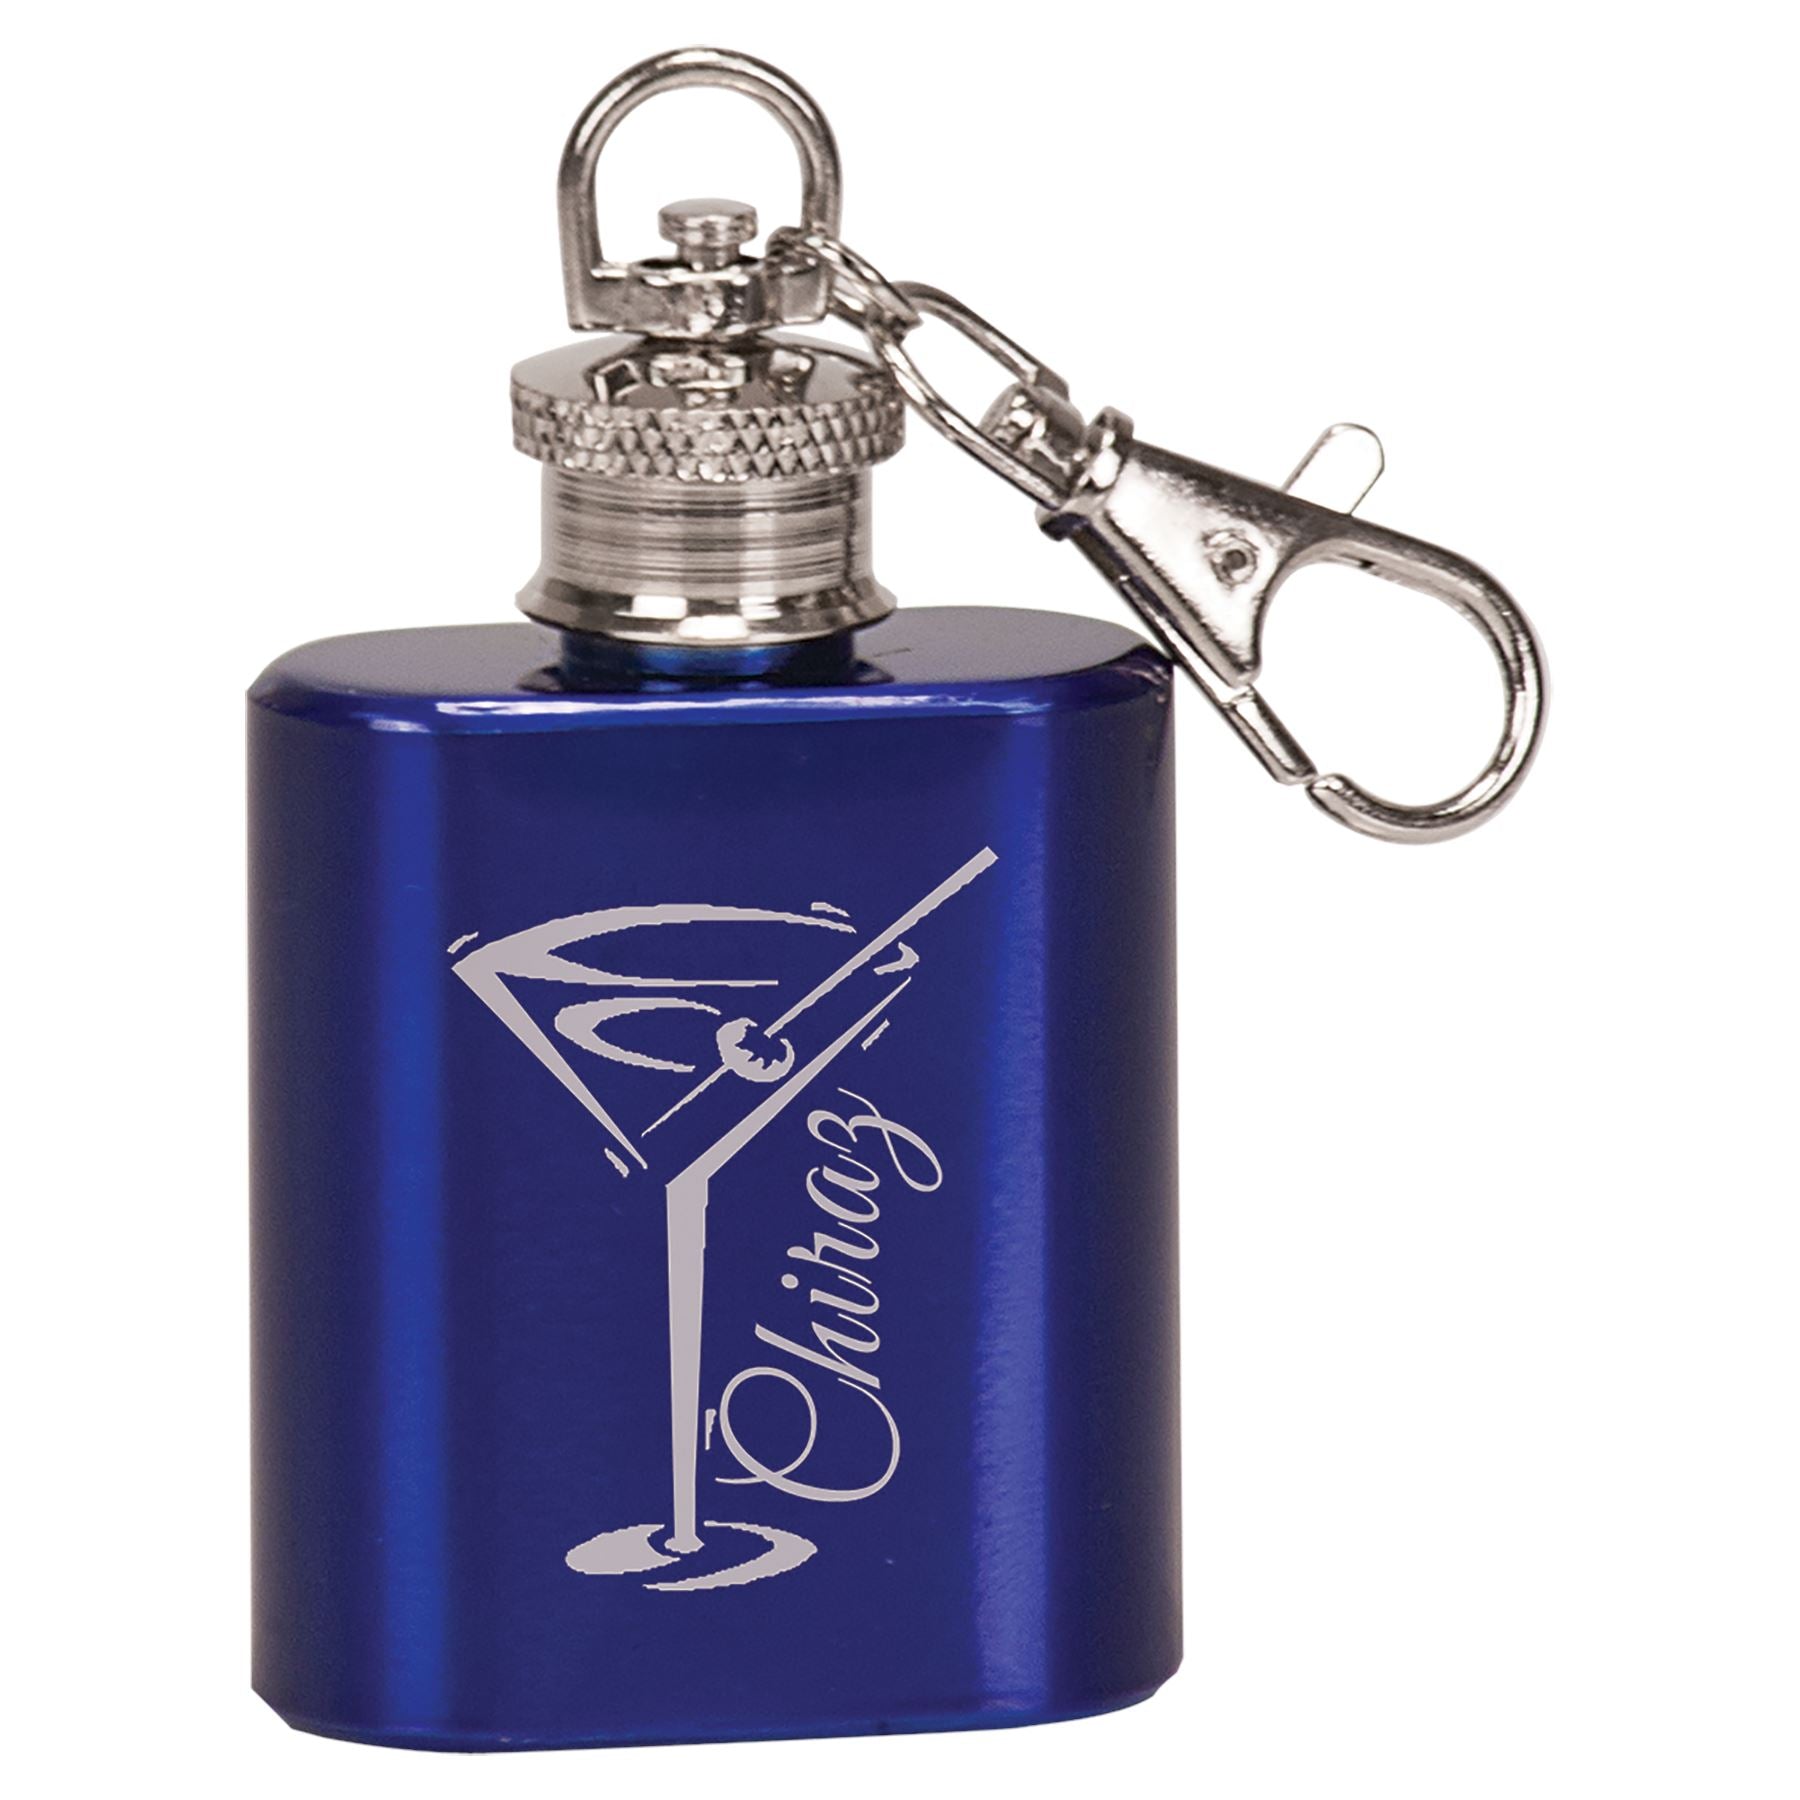 Keychain Flask, 1oz Stainless Steel, Laser Engraved Flasks Craftworks NW 